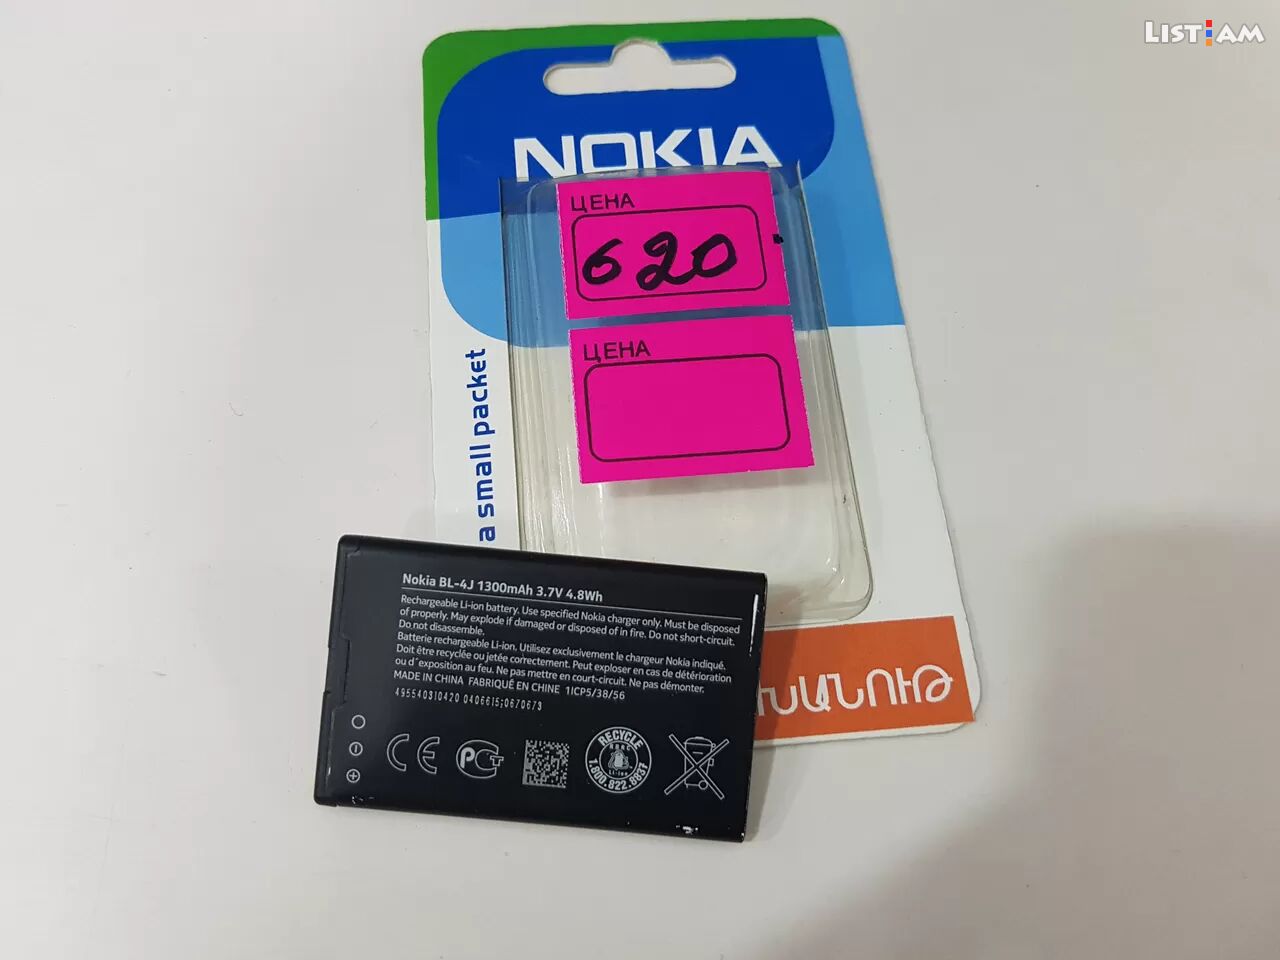 Nokia 620 battery